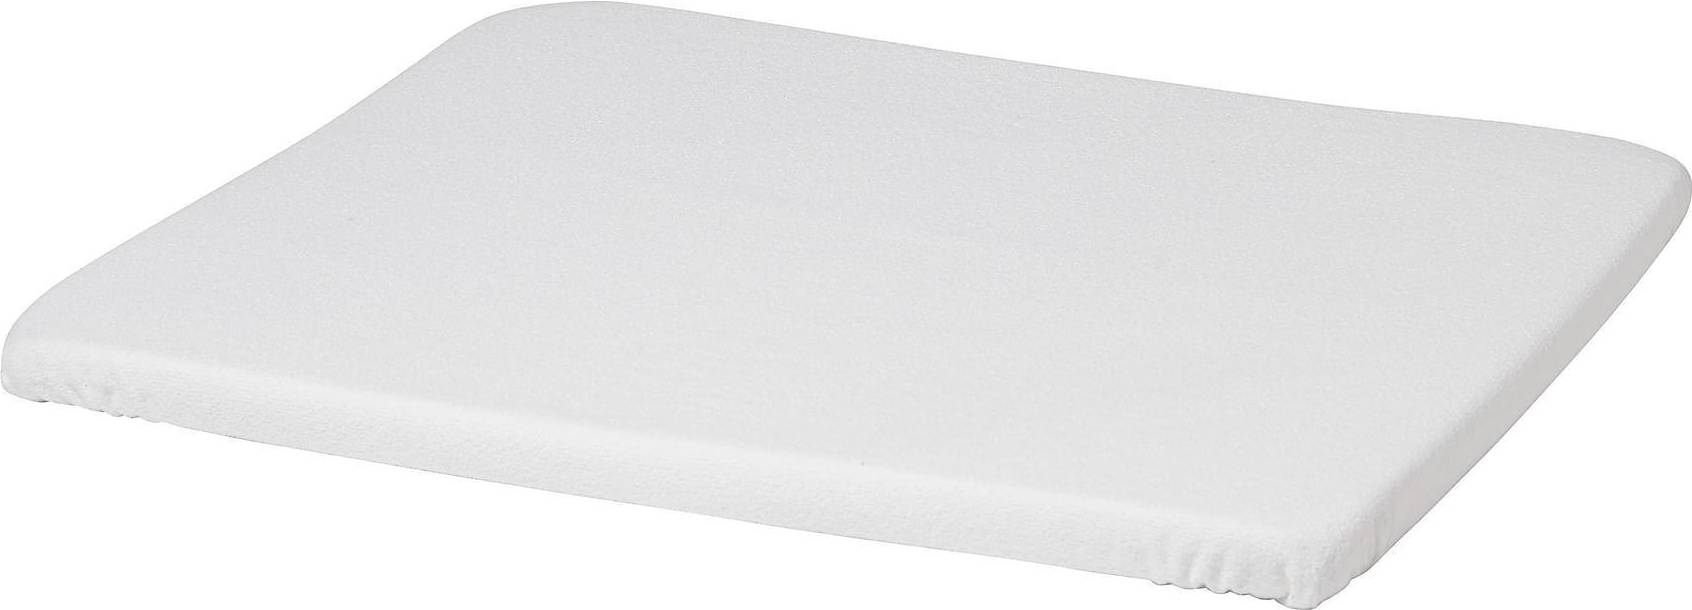  Bild på Manis-h Sleeping pad for Changing Table Zendaya 65x74cm skötbädd